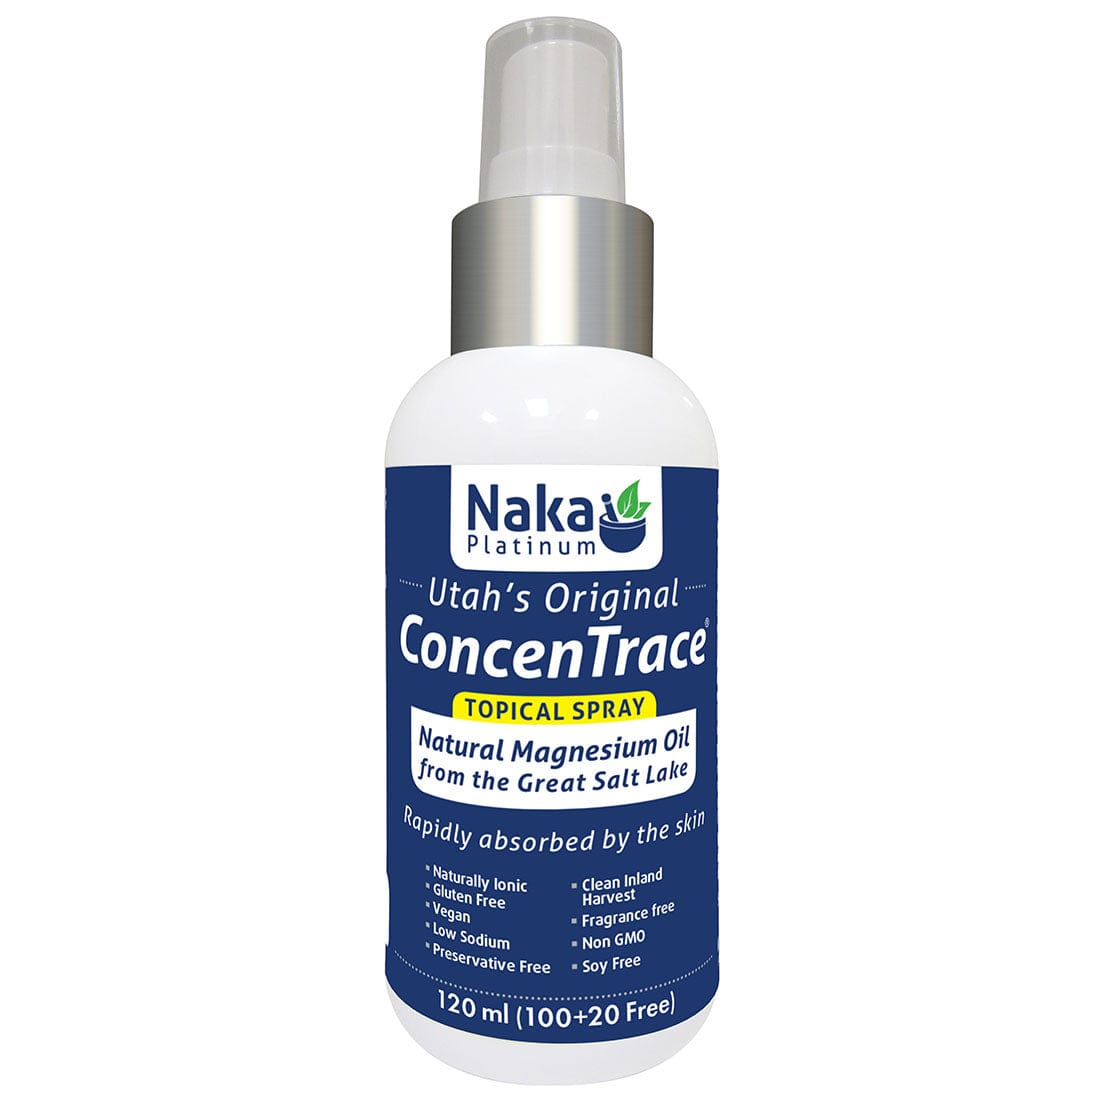 Naka Platinum Concentrace (Utah's Original) Topical spray, 120ml